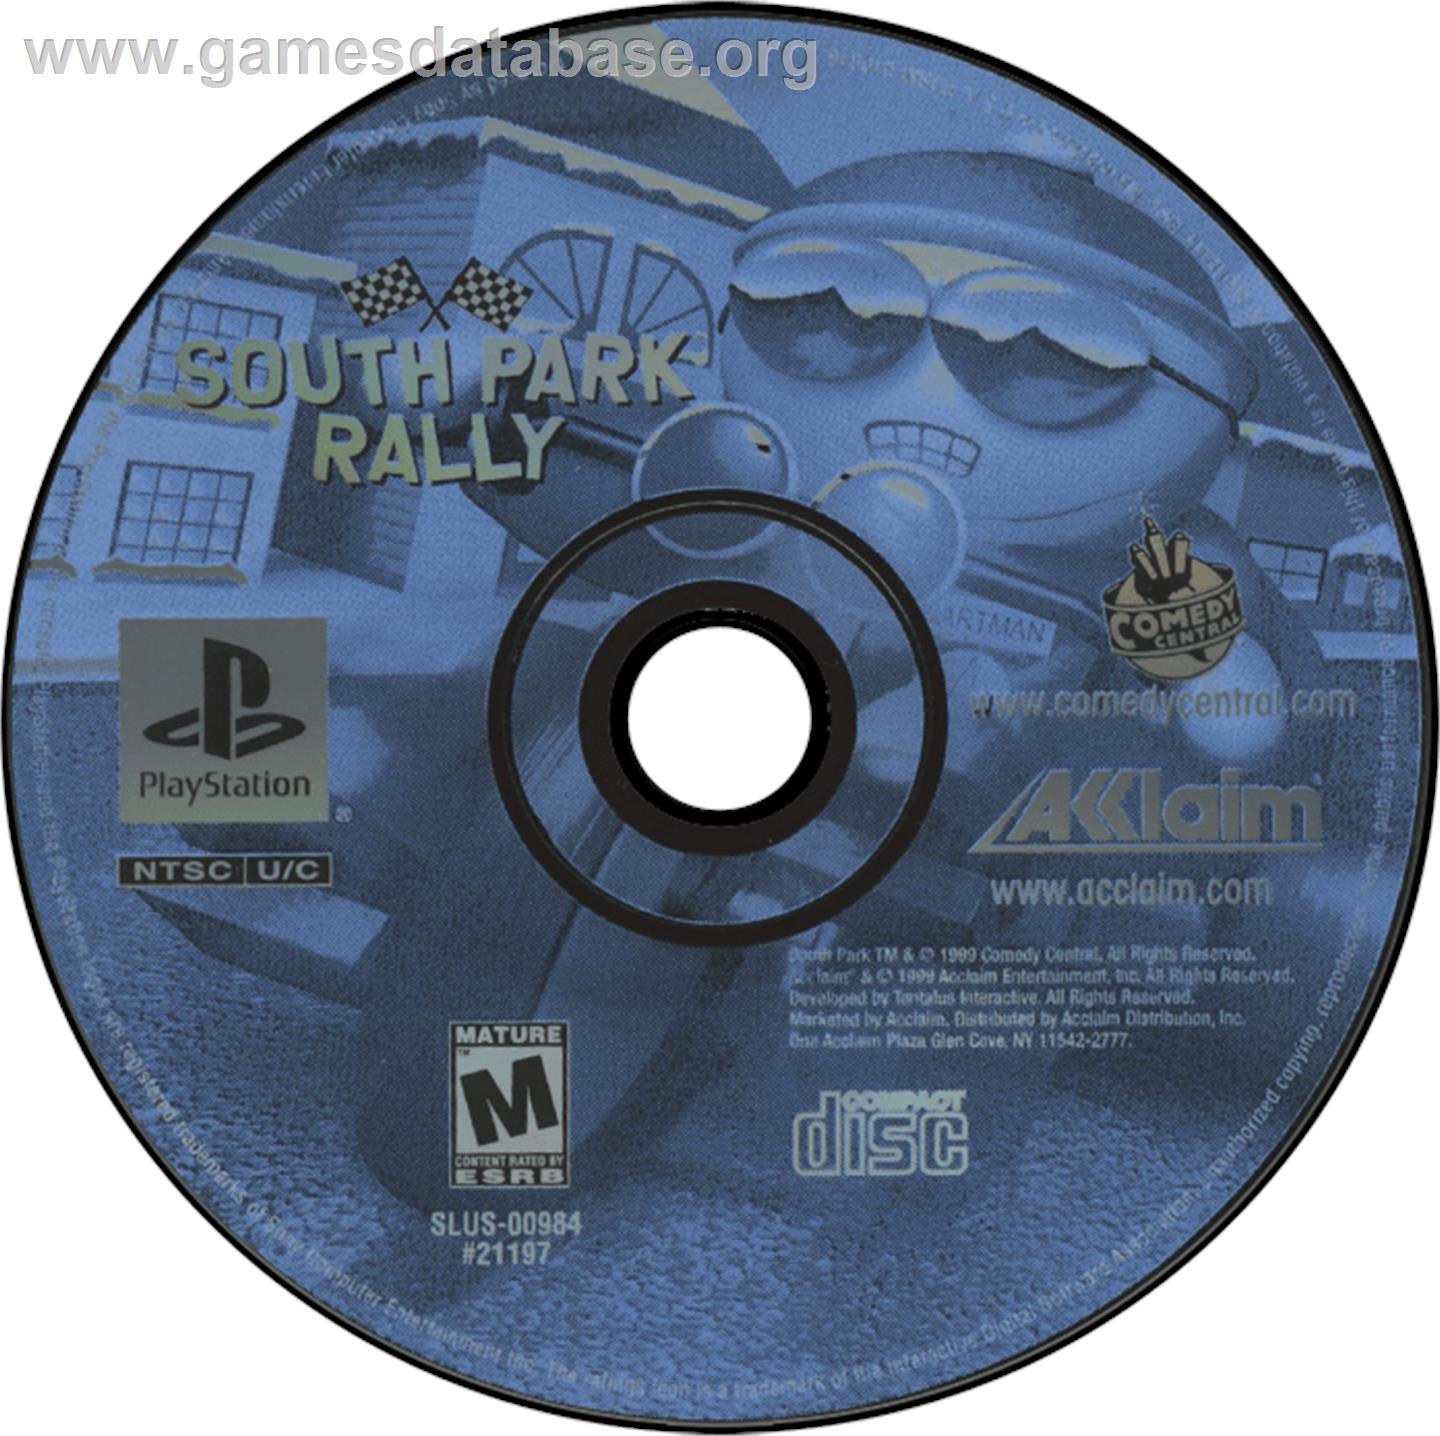 South Park Rally - Sony Playstation - Artwork - Disc